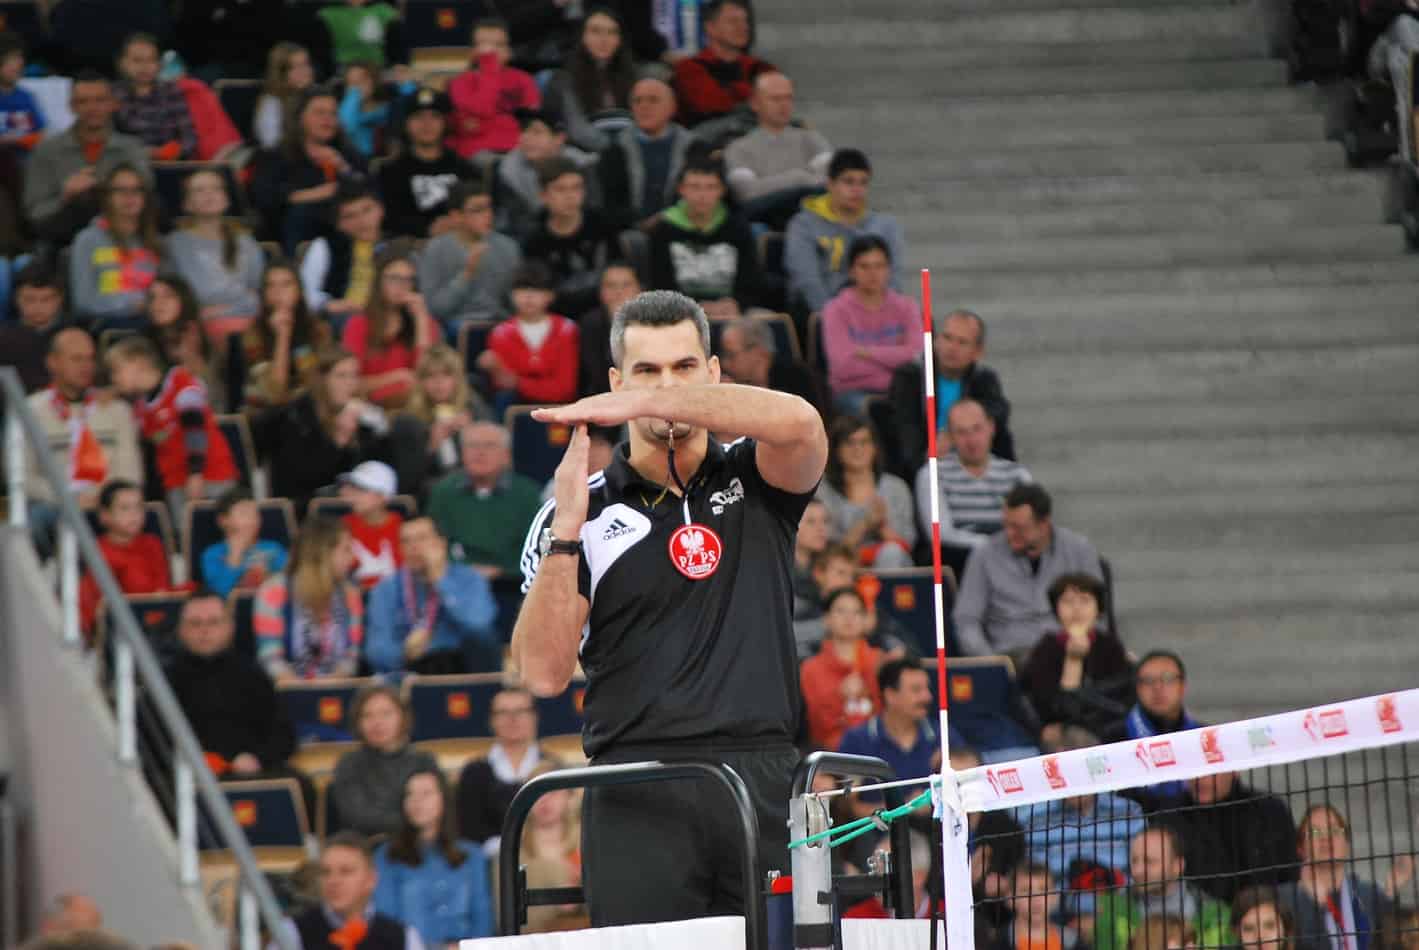 volleyball referee signals sand